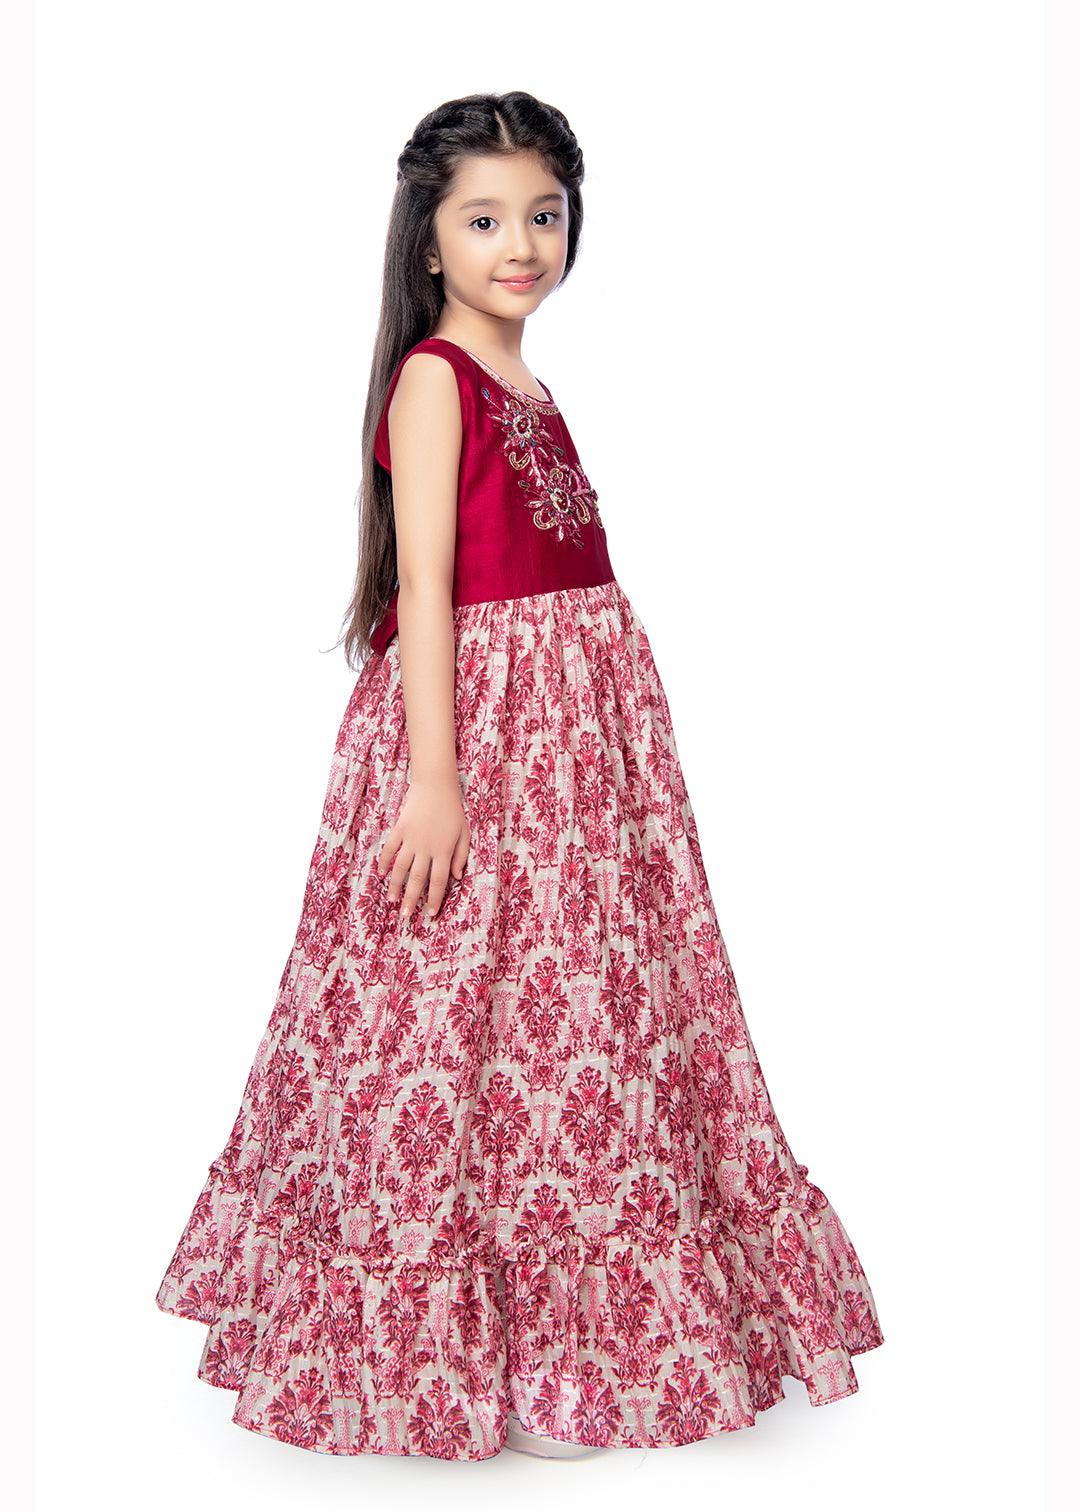 Girls Salwar Kameez - Buy Girls Salwar Suit online in India | G3Fashion |  Kids bridesmaid dress, Western dresses for girl, Gowns for girls